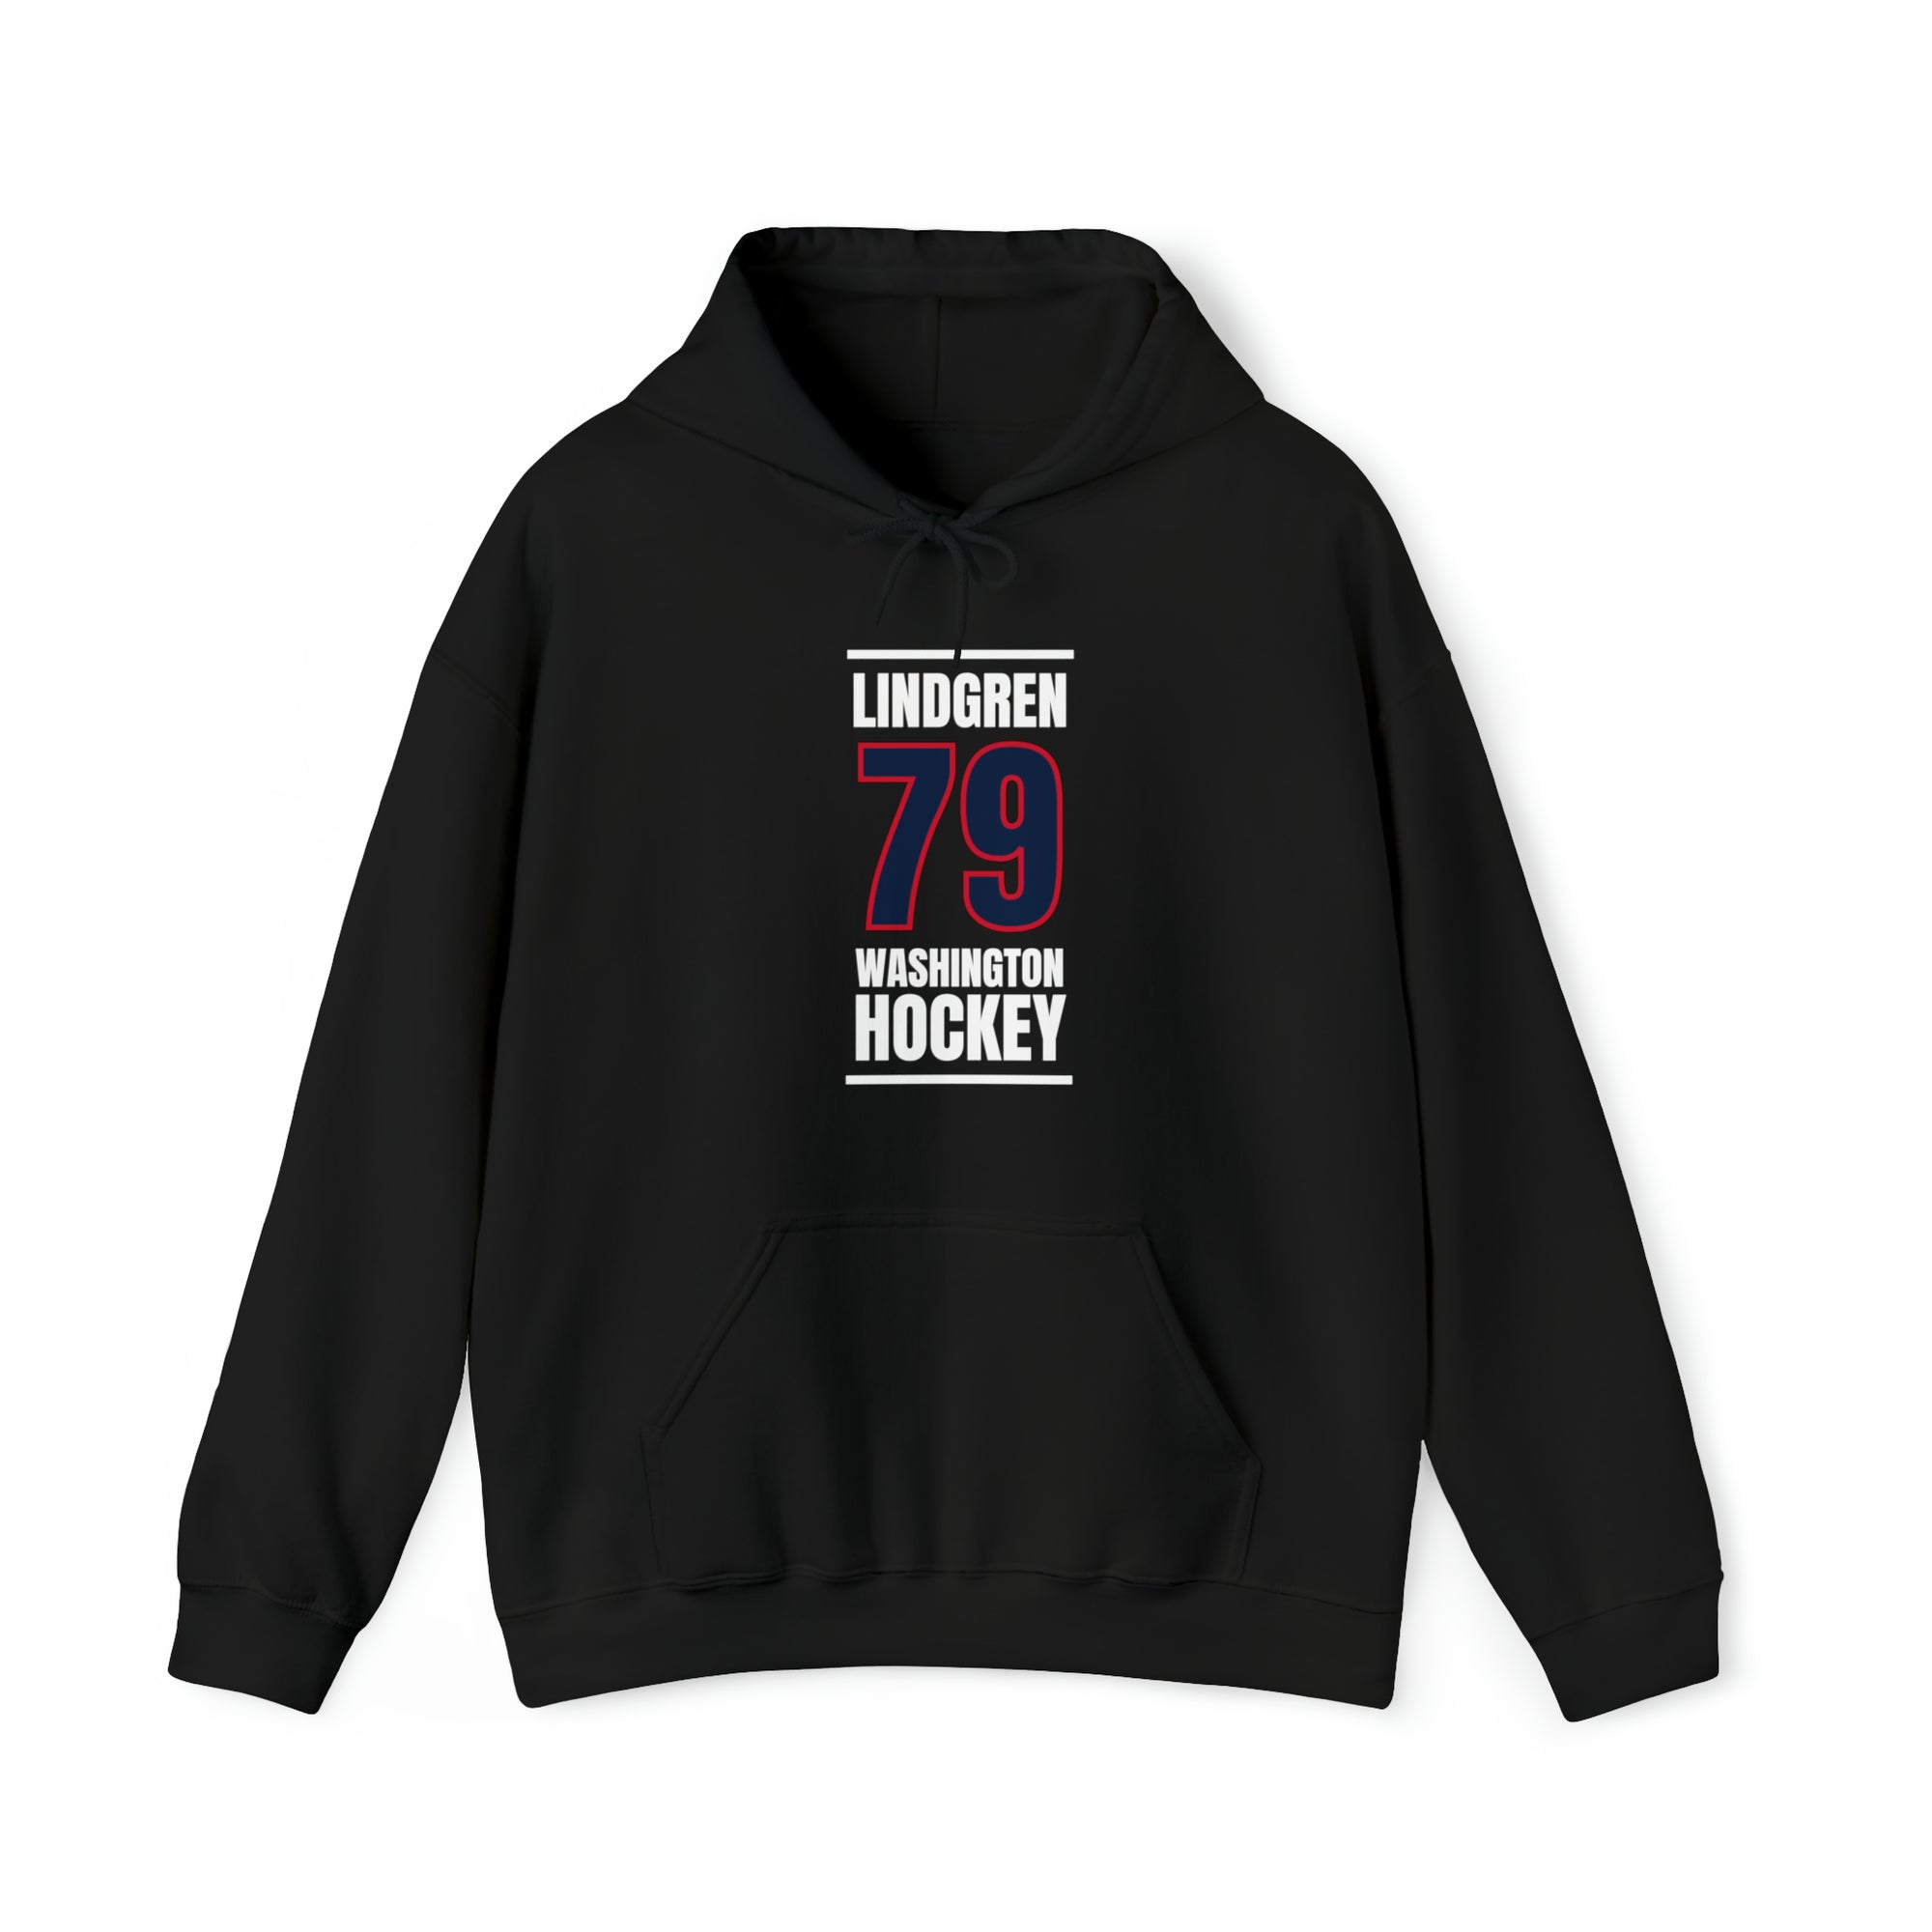 Lindgren 79 Washington Hockey Navy Vertical Design Unisex Hooded Sweatshirt